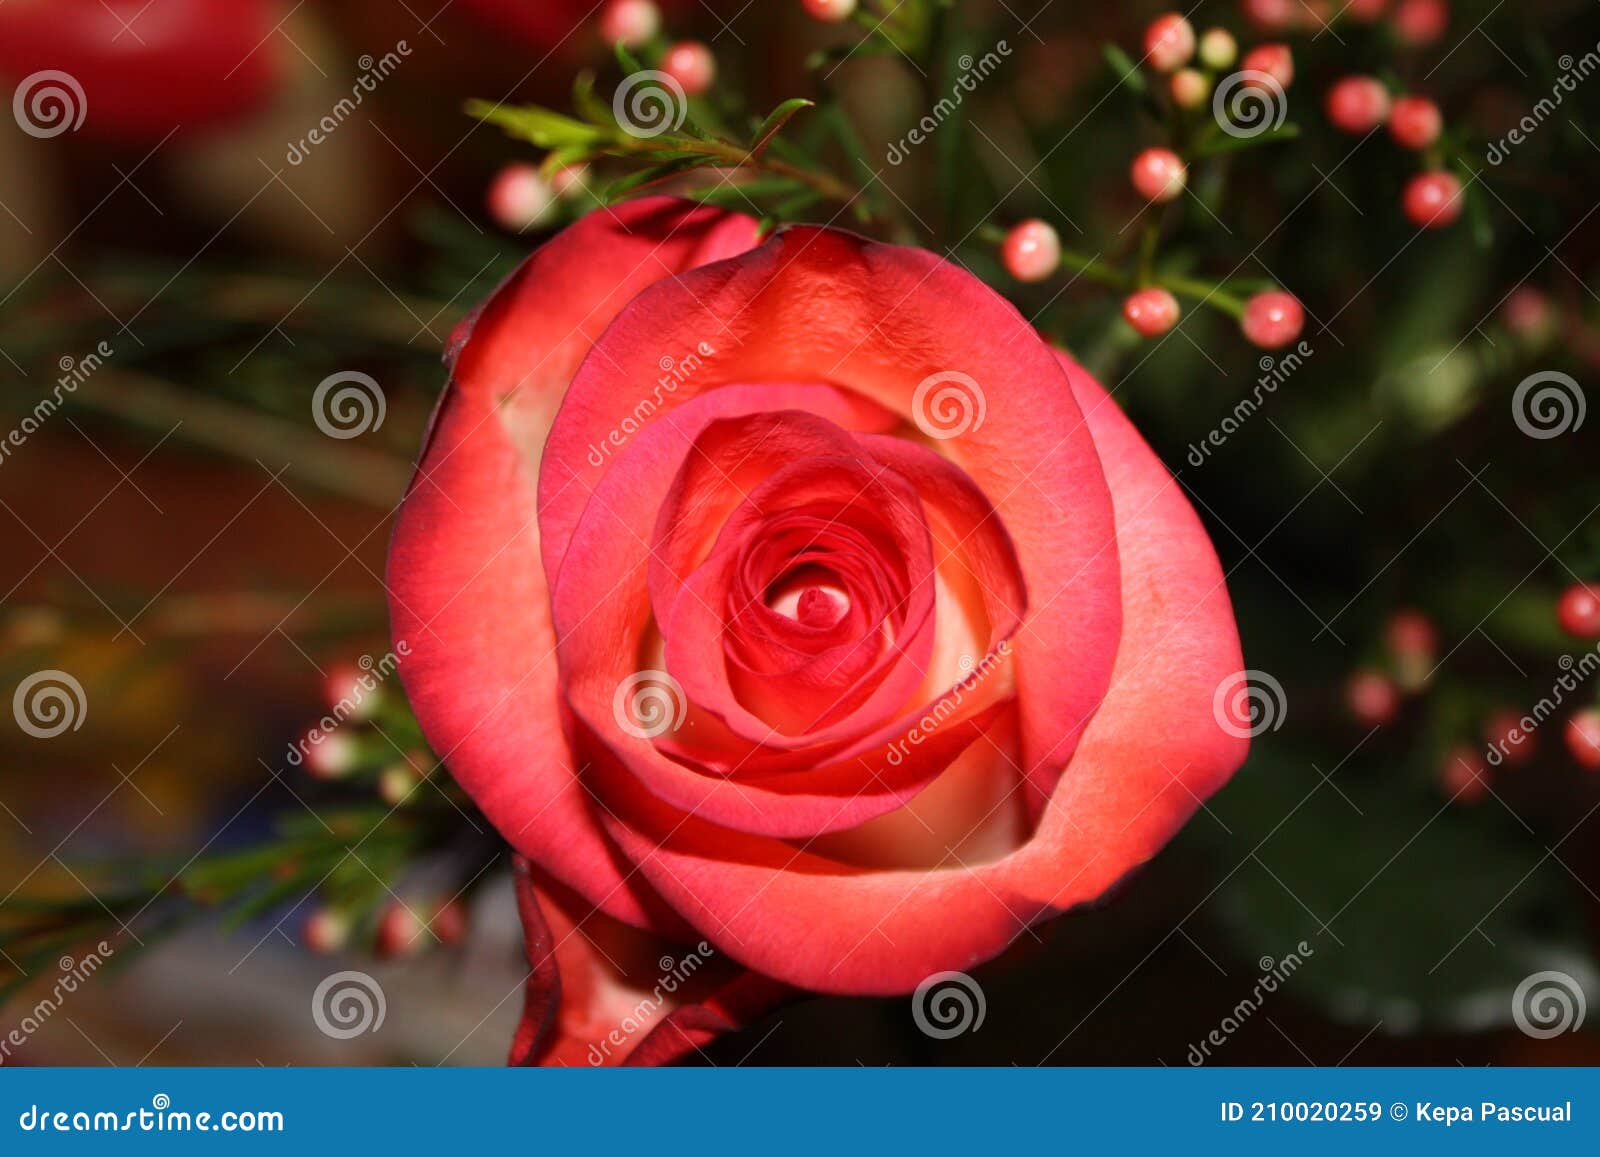 flor blosson roja